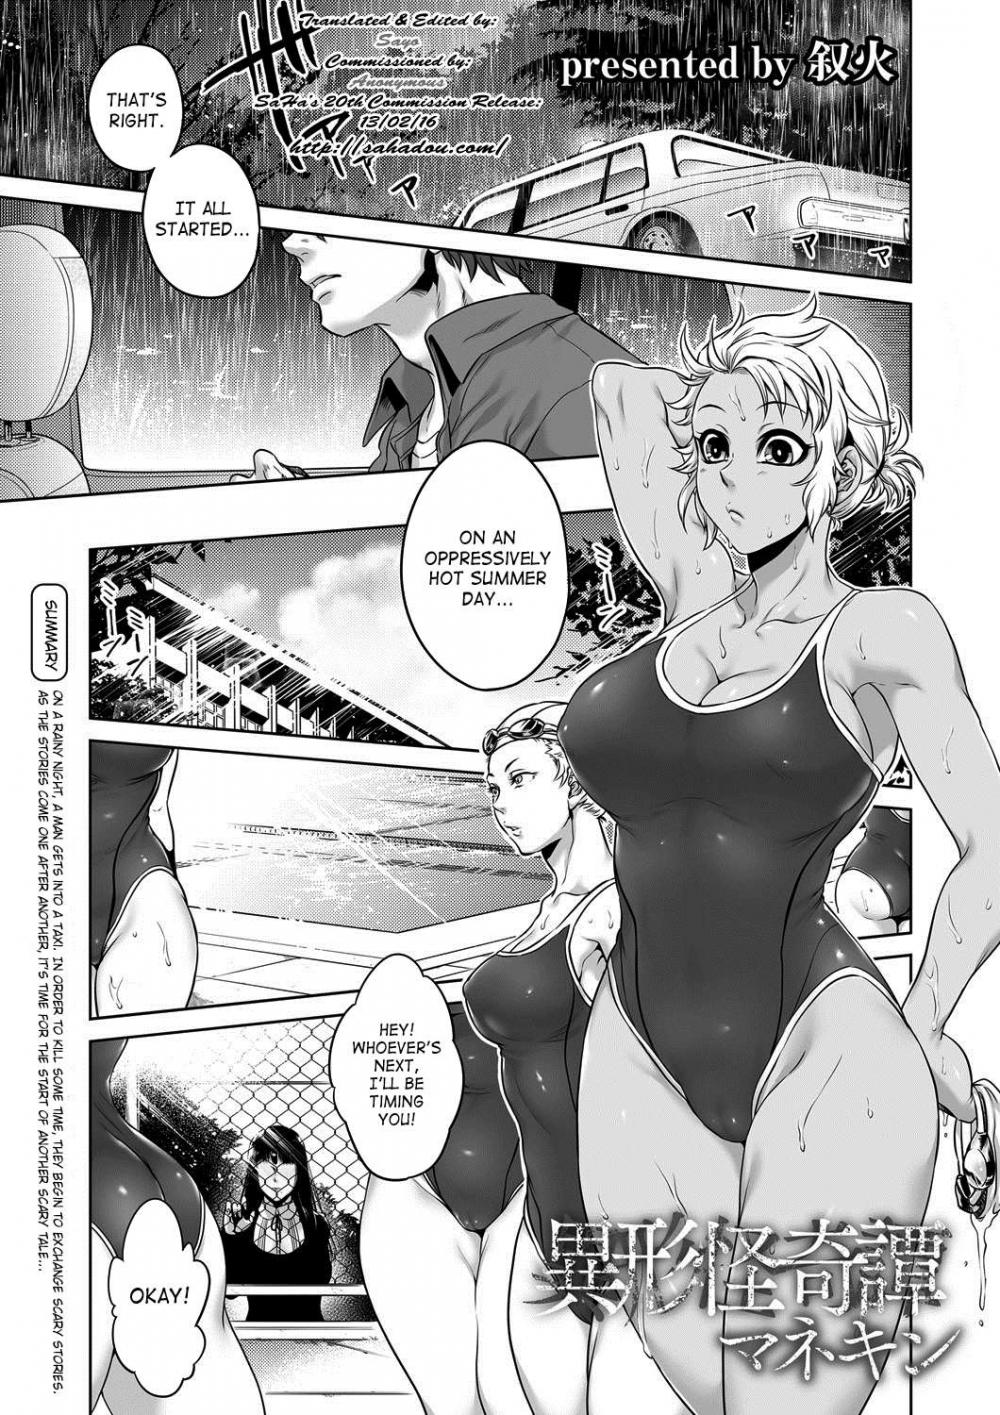 Hentai Manga Comic-Wonderfully Grotesque Mystery - Mannequin-Read-1